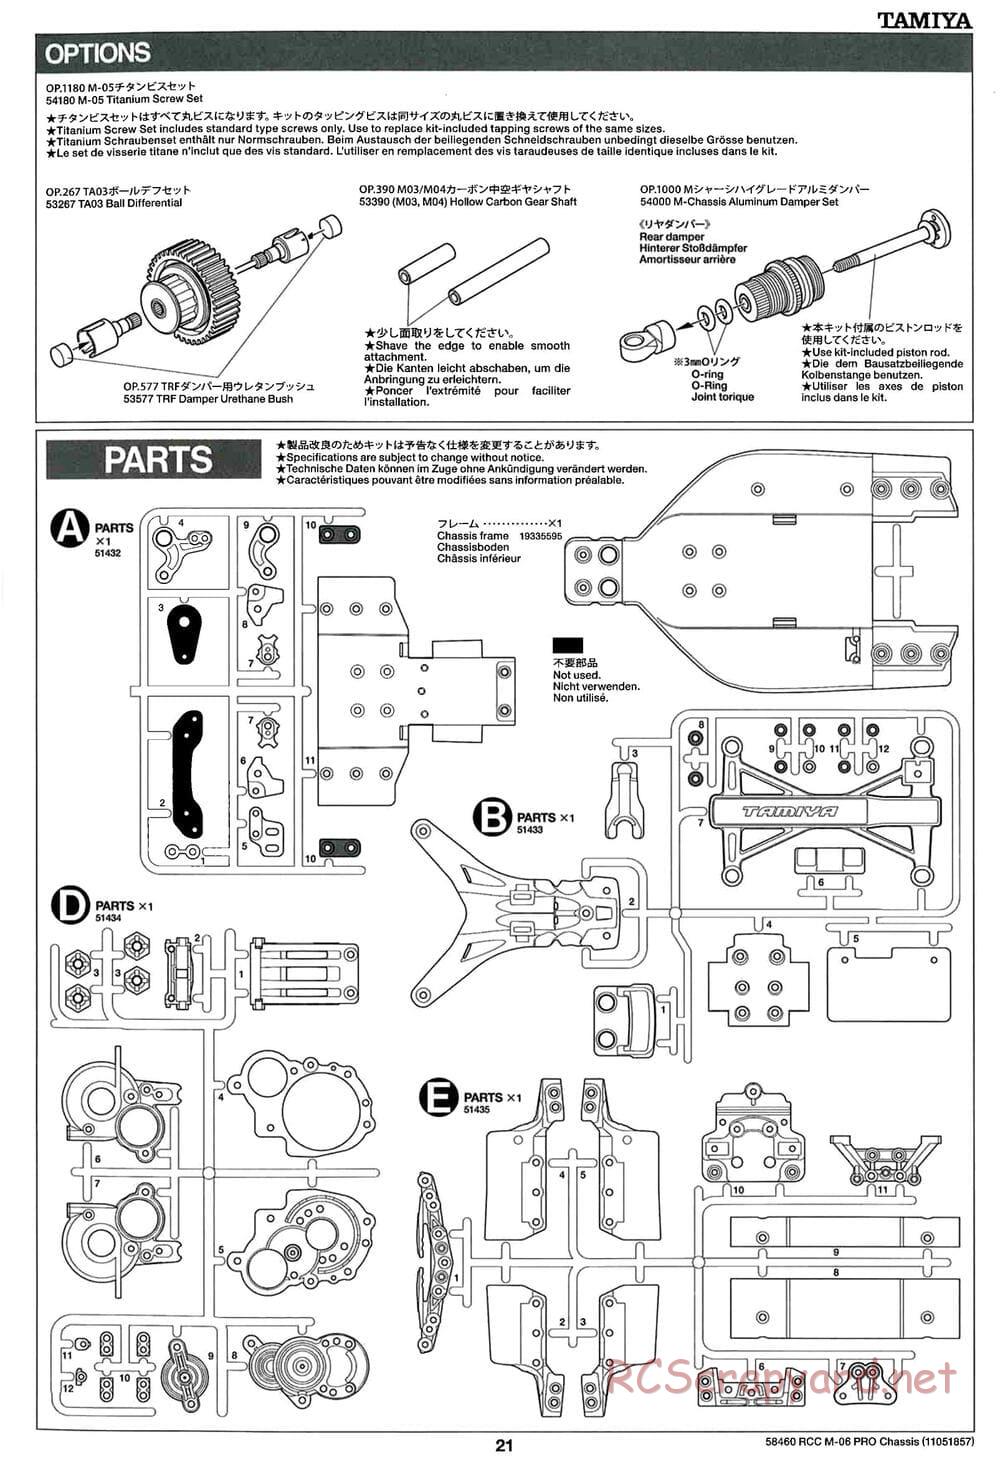 Tamiya - M-06 Pro Chassis - Manual - Page 21